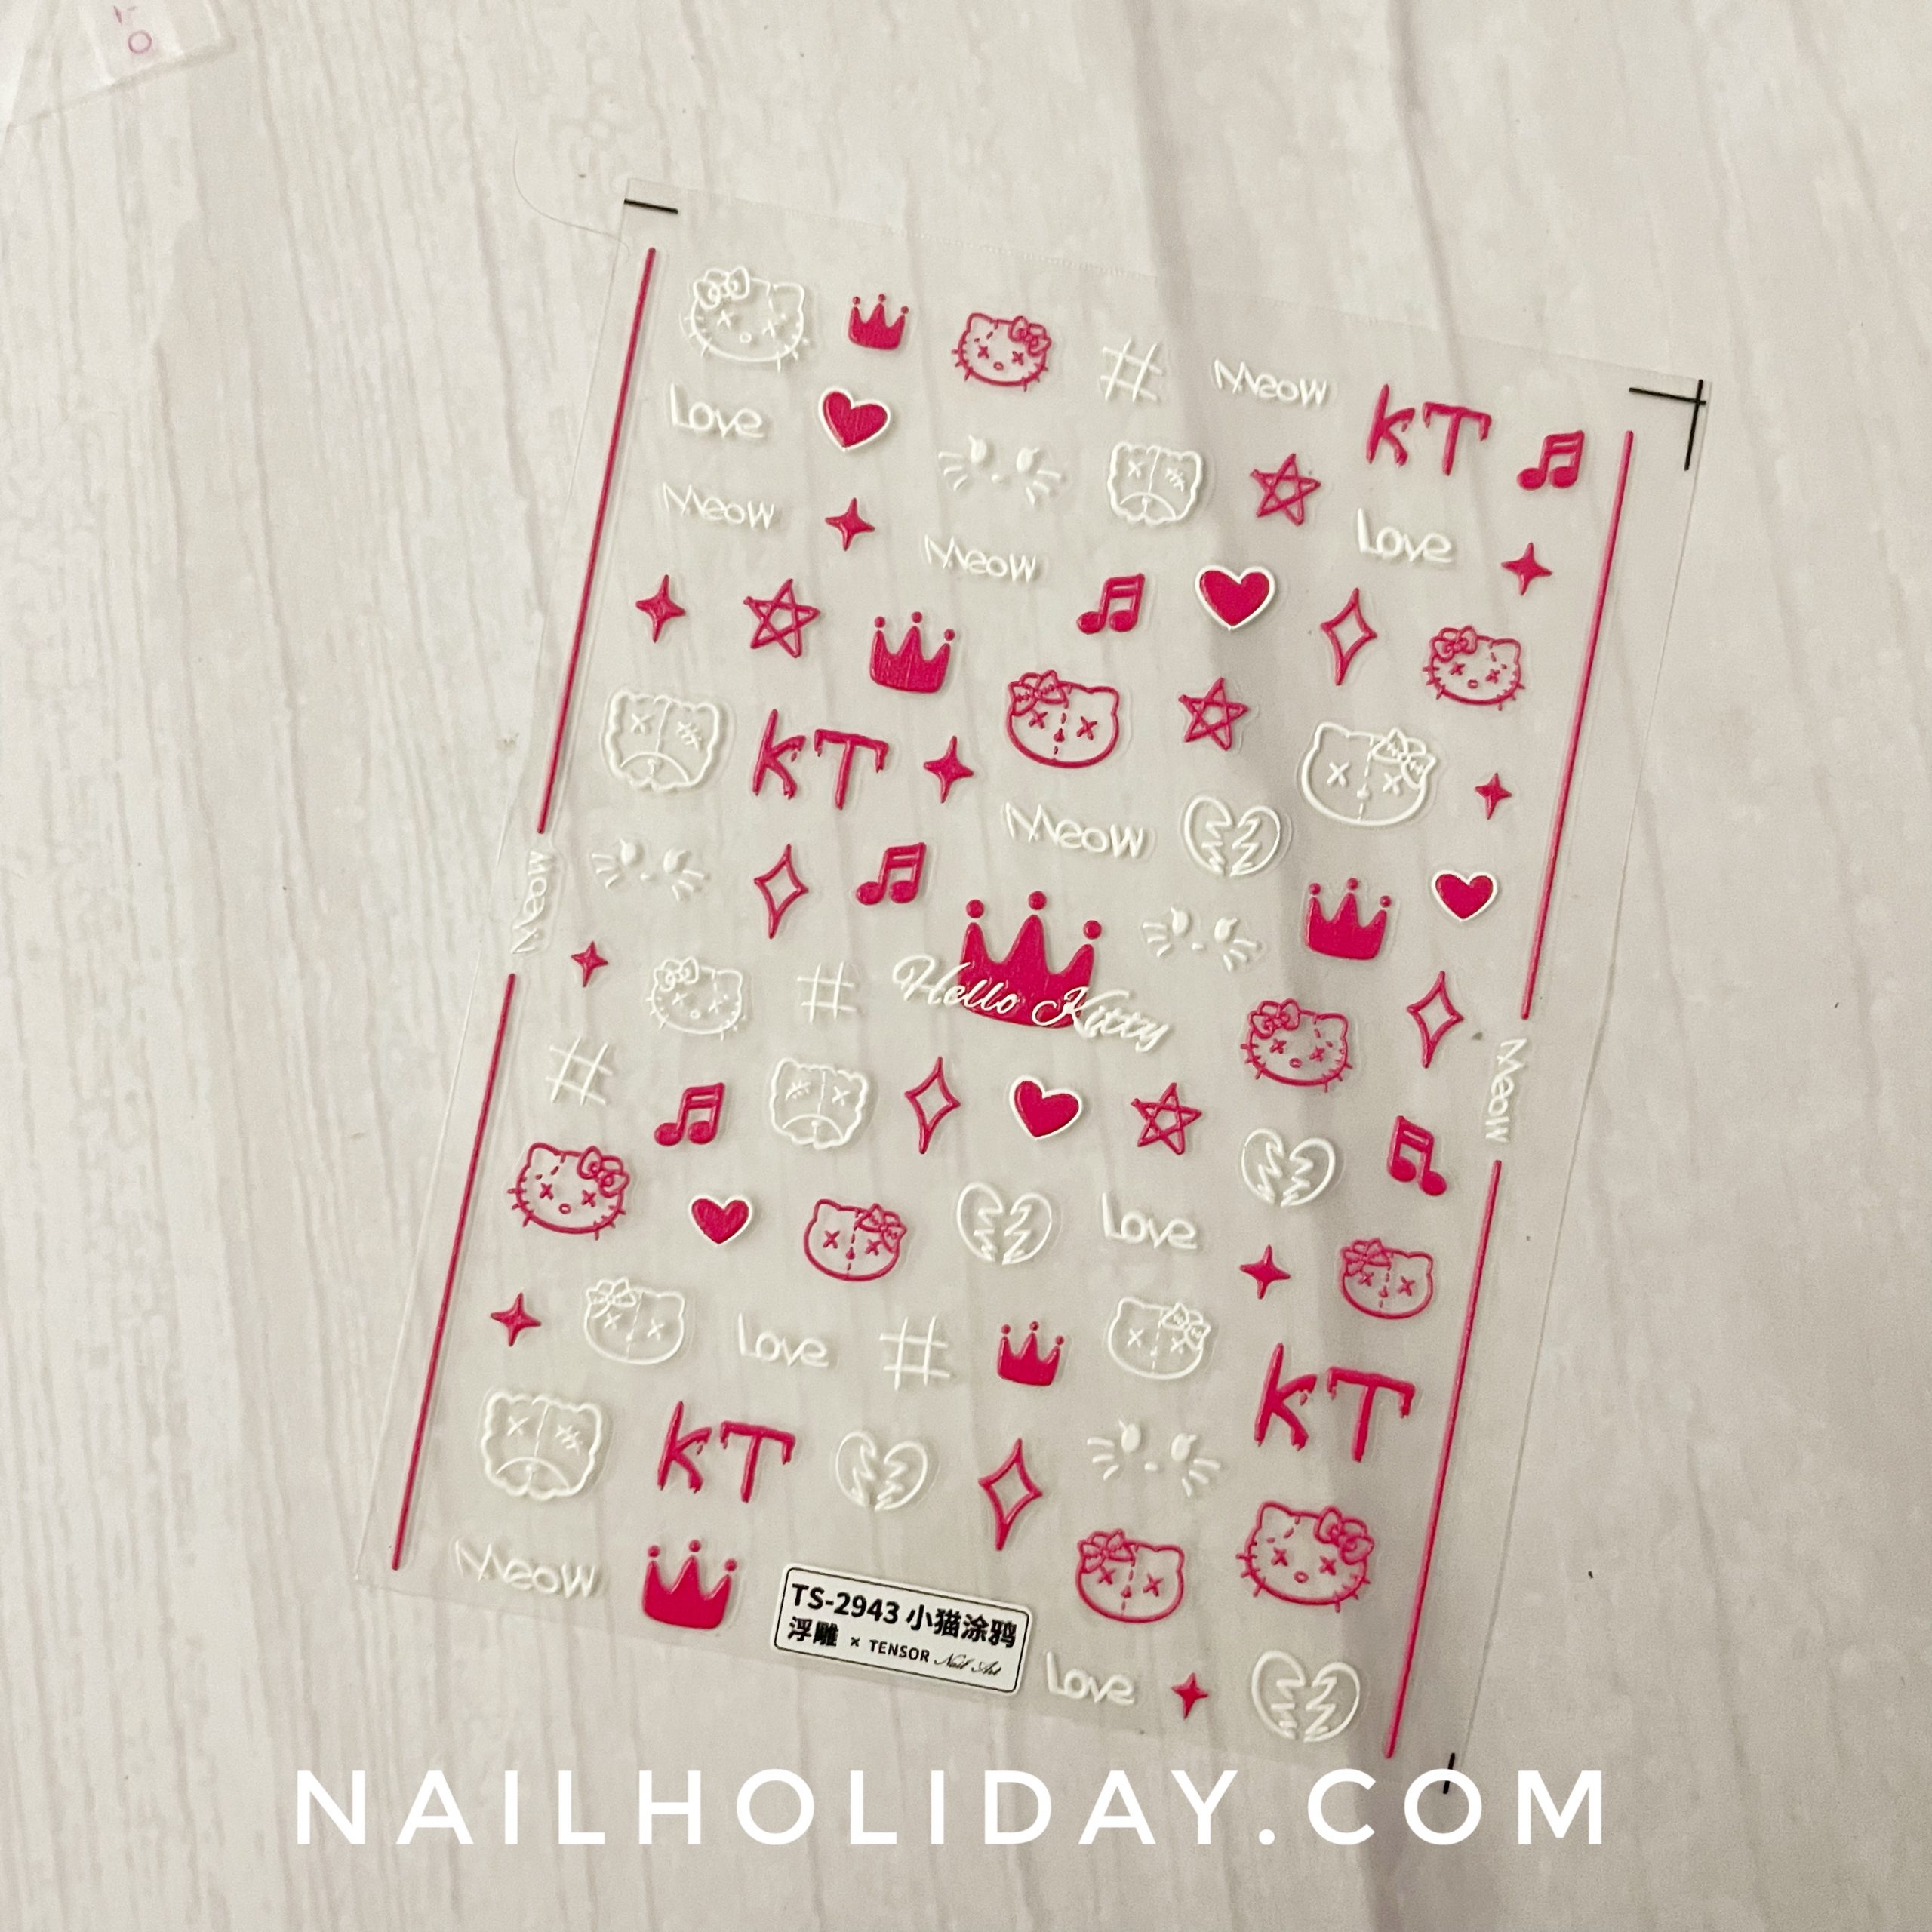  Hello Kitty Nail Art Sticker (B) - 5 Pack Mixed Design